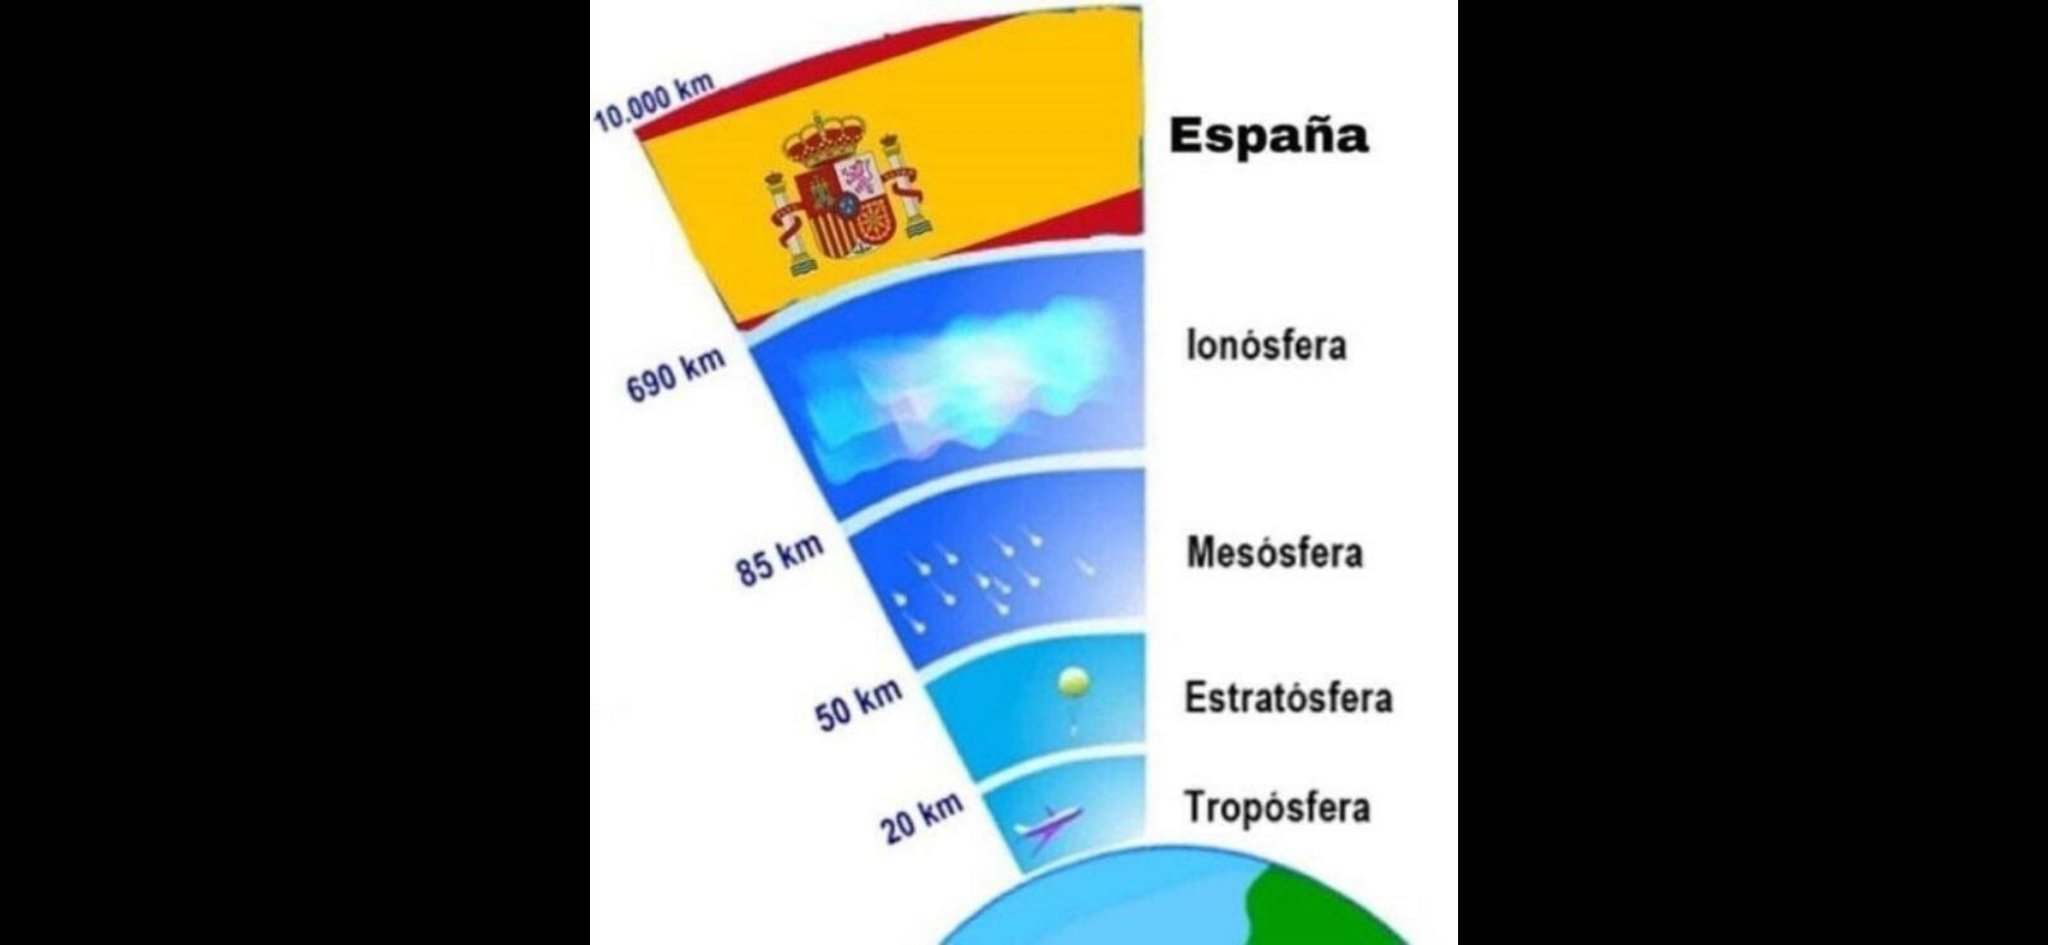 ARRIBA ESPAÑA - meme